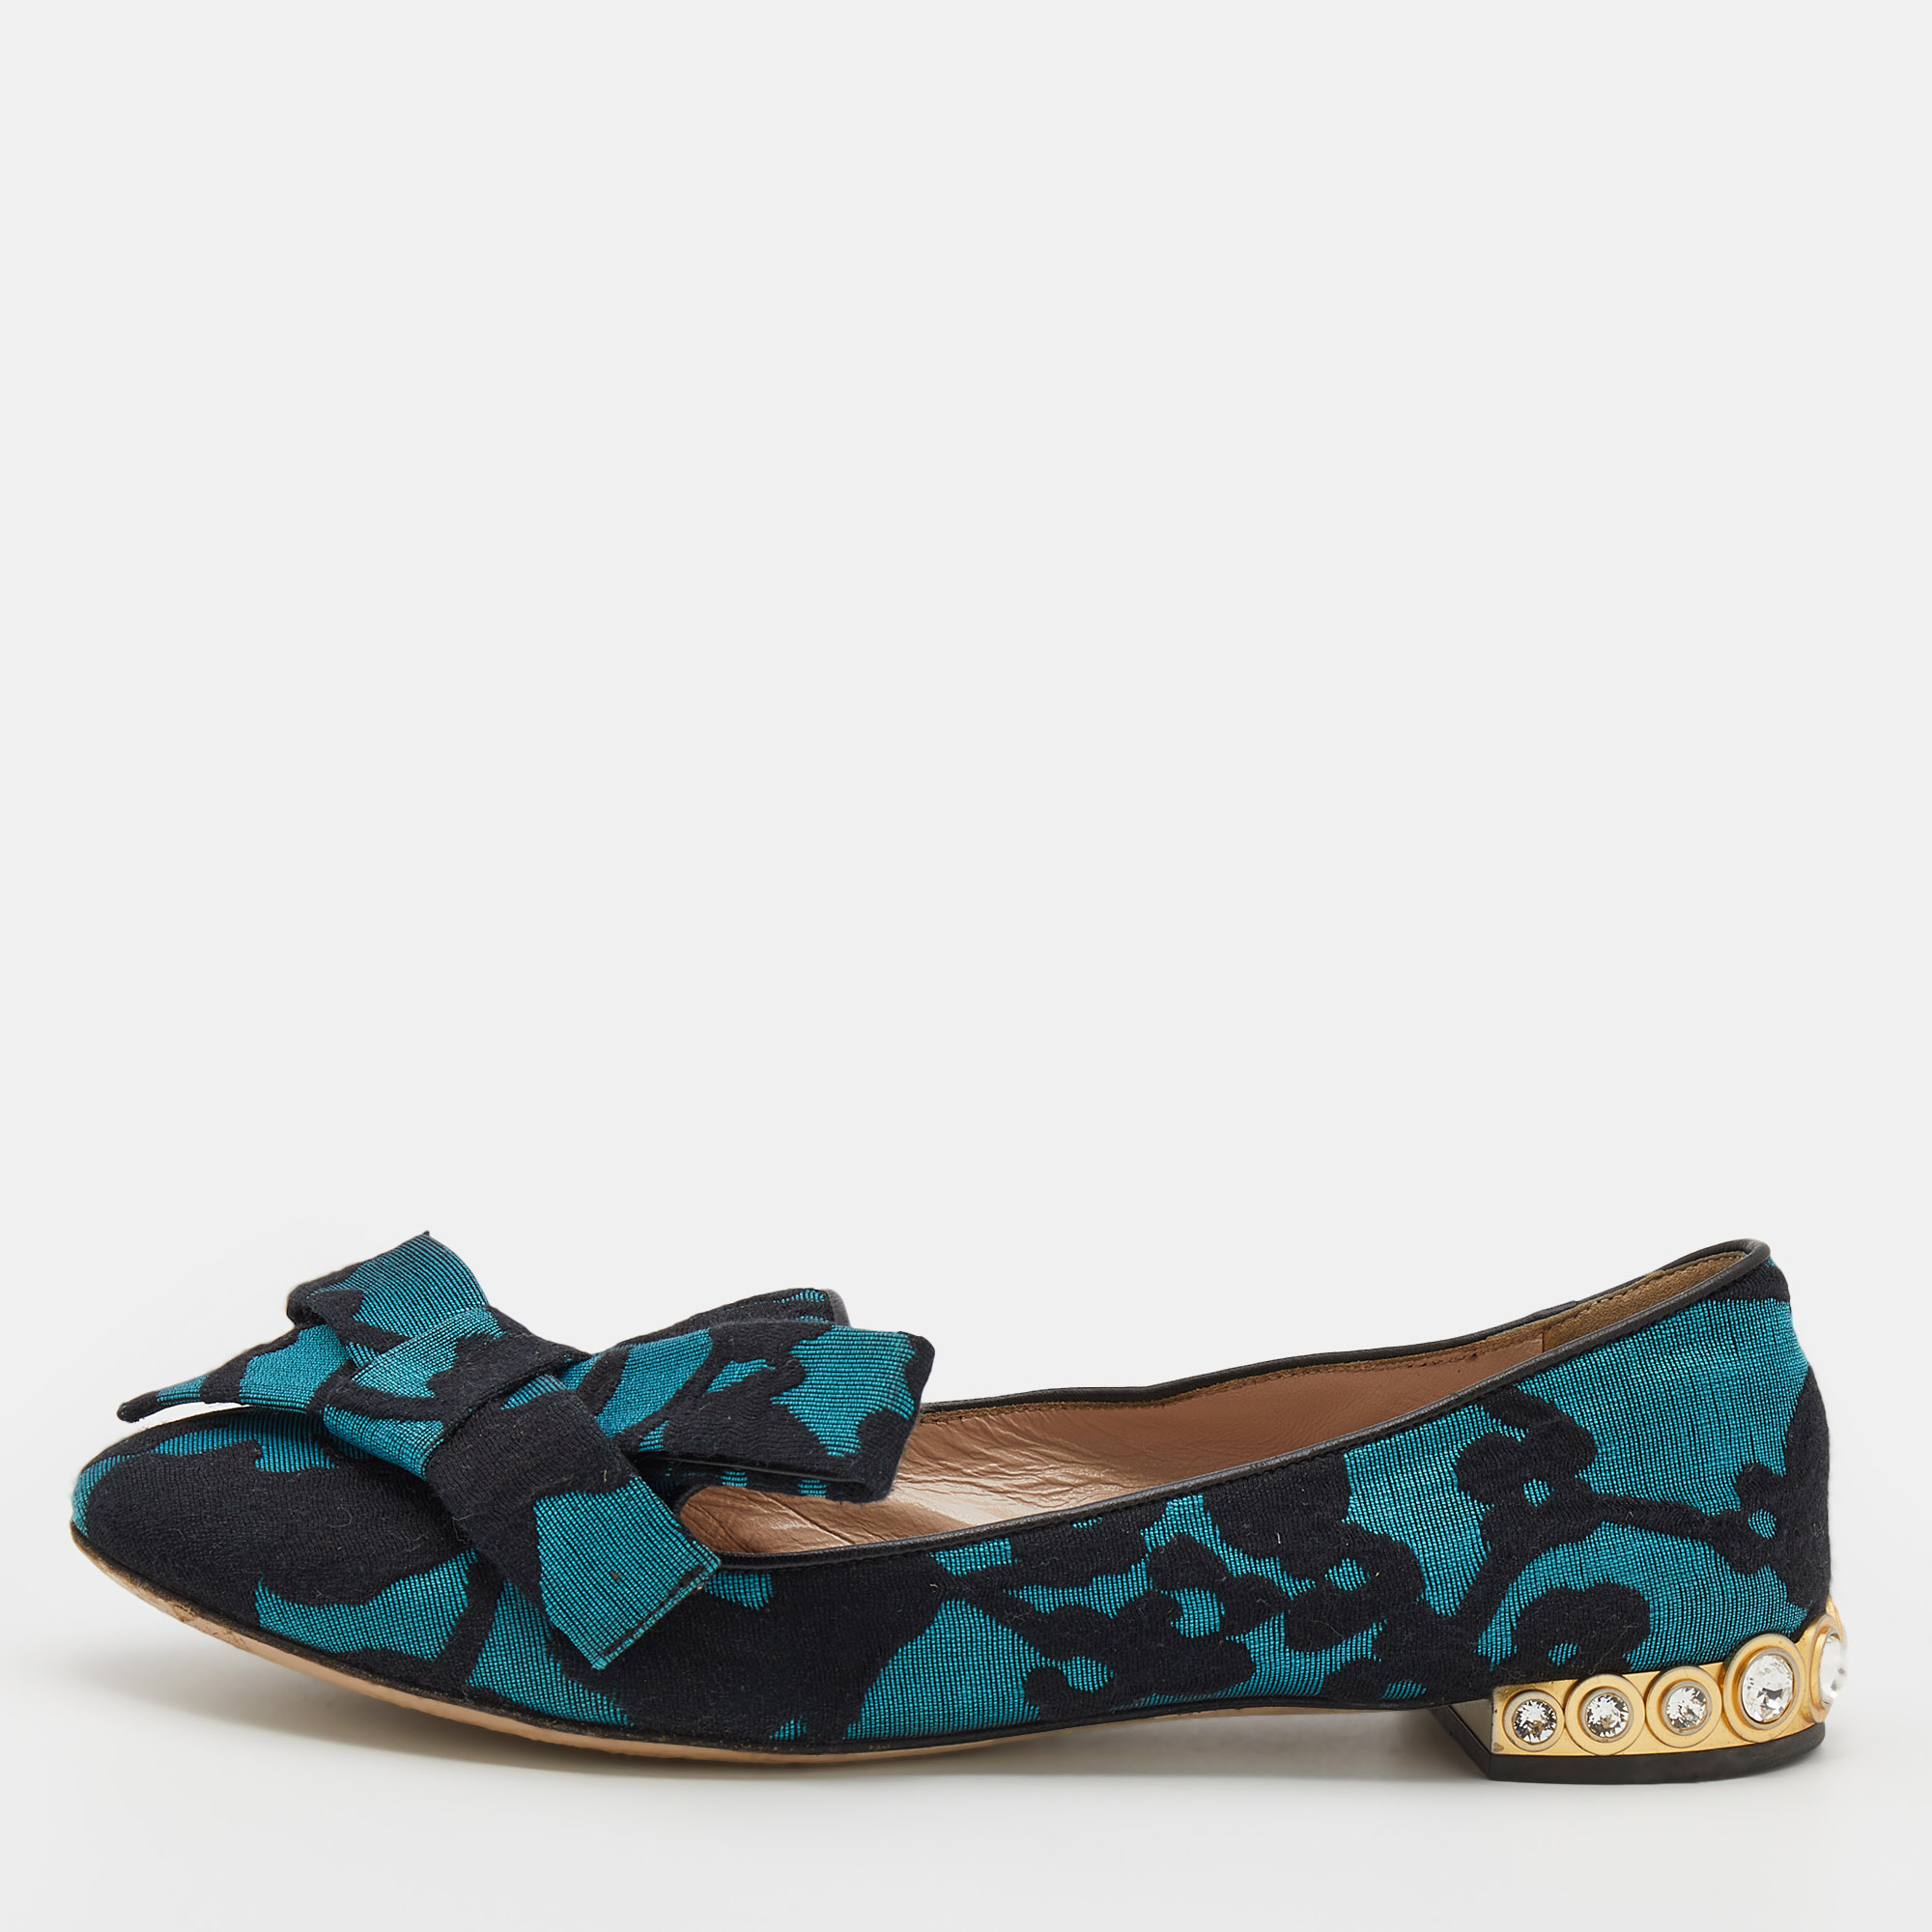 Miu miu blue/black jacquard bow embellished smoking slippers size 38.5